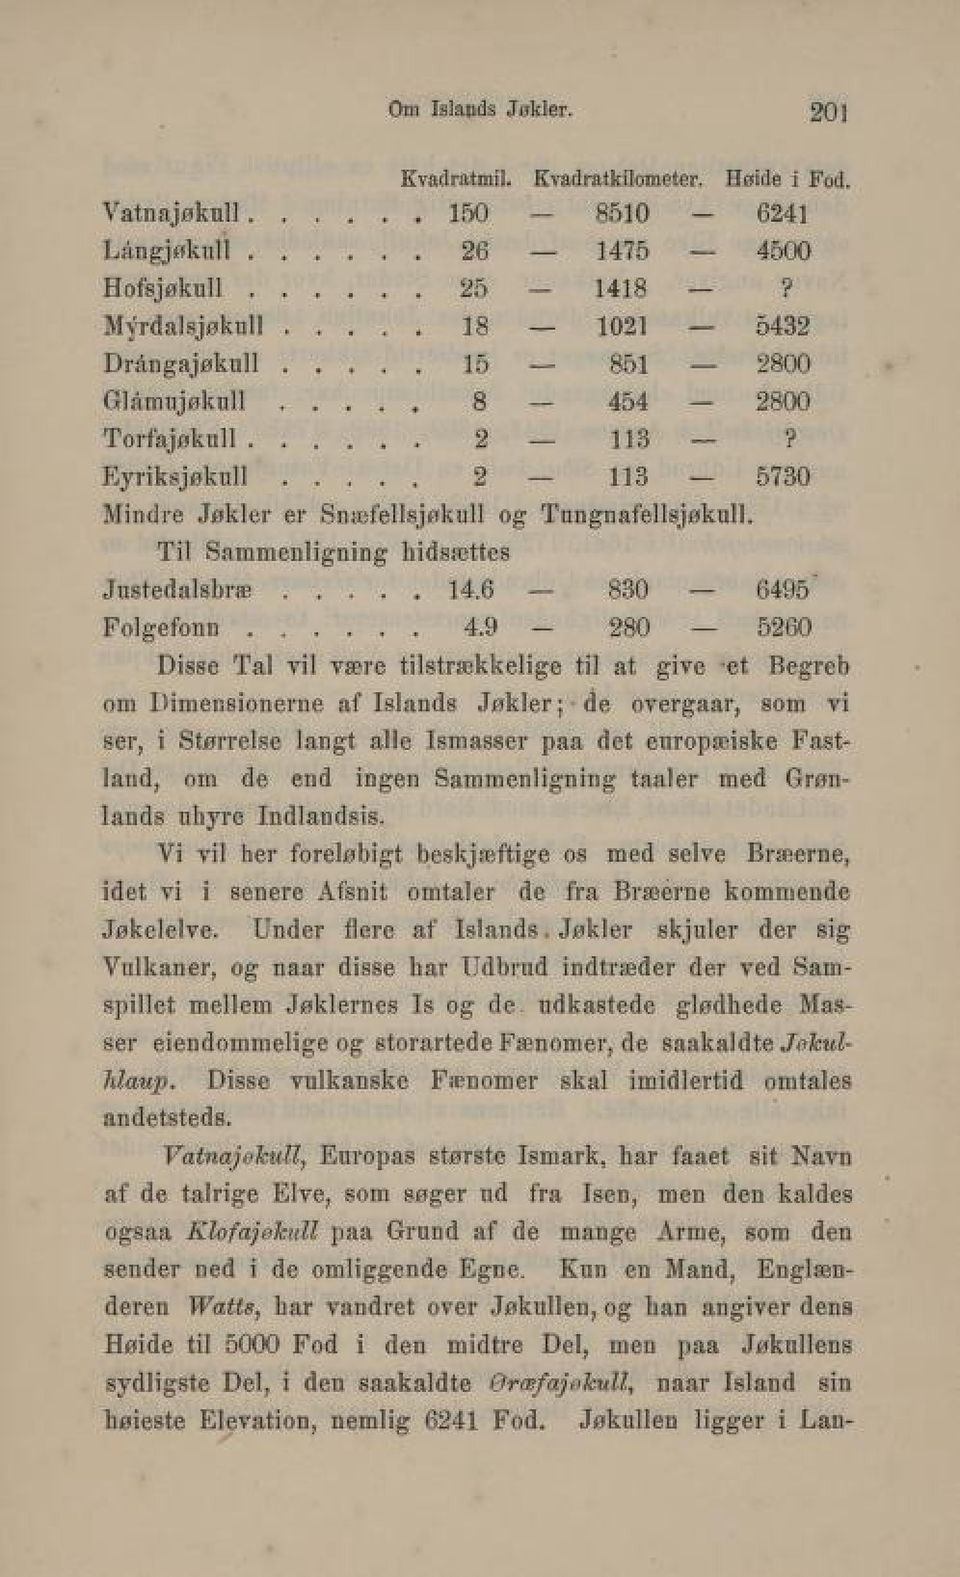 Eyriksjøkull 2 113 5730 Mindre Jøkler er Snæfellsjøkull og Timgnafellsjøkull Til Sammenligning hidsættes Justedalsbræ 14.6 830 6495 Folgefonn 4.